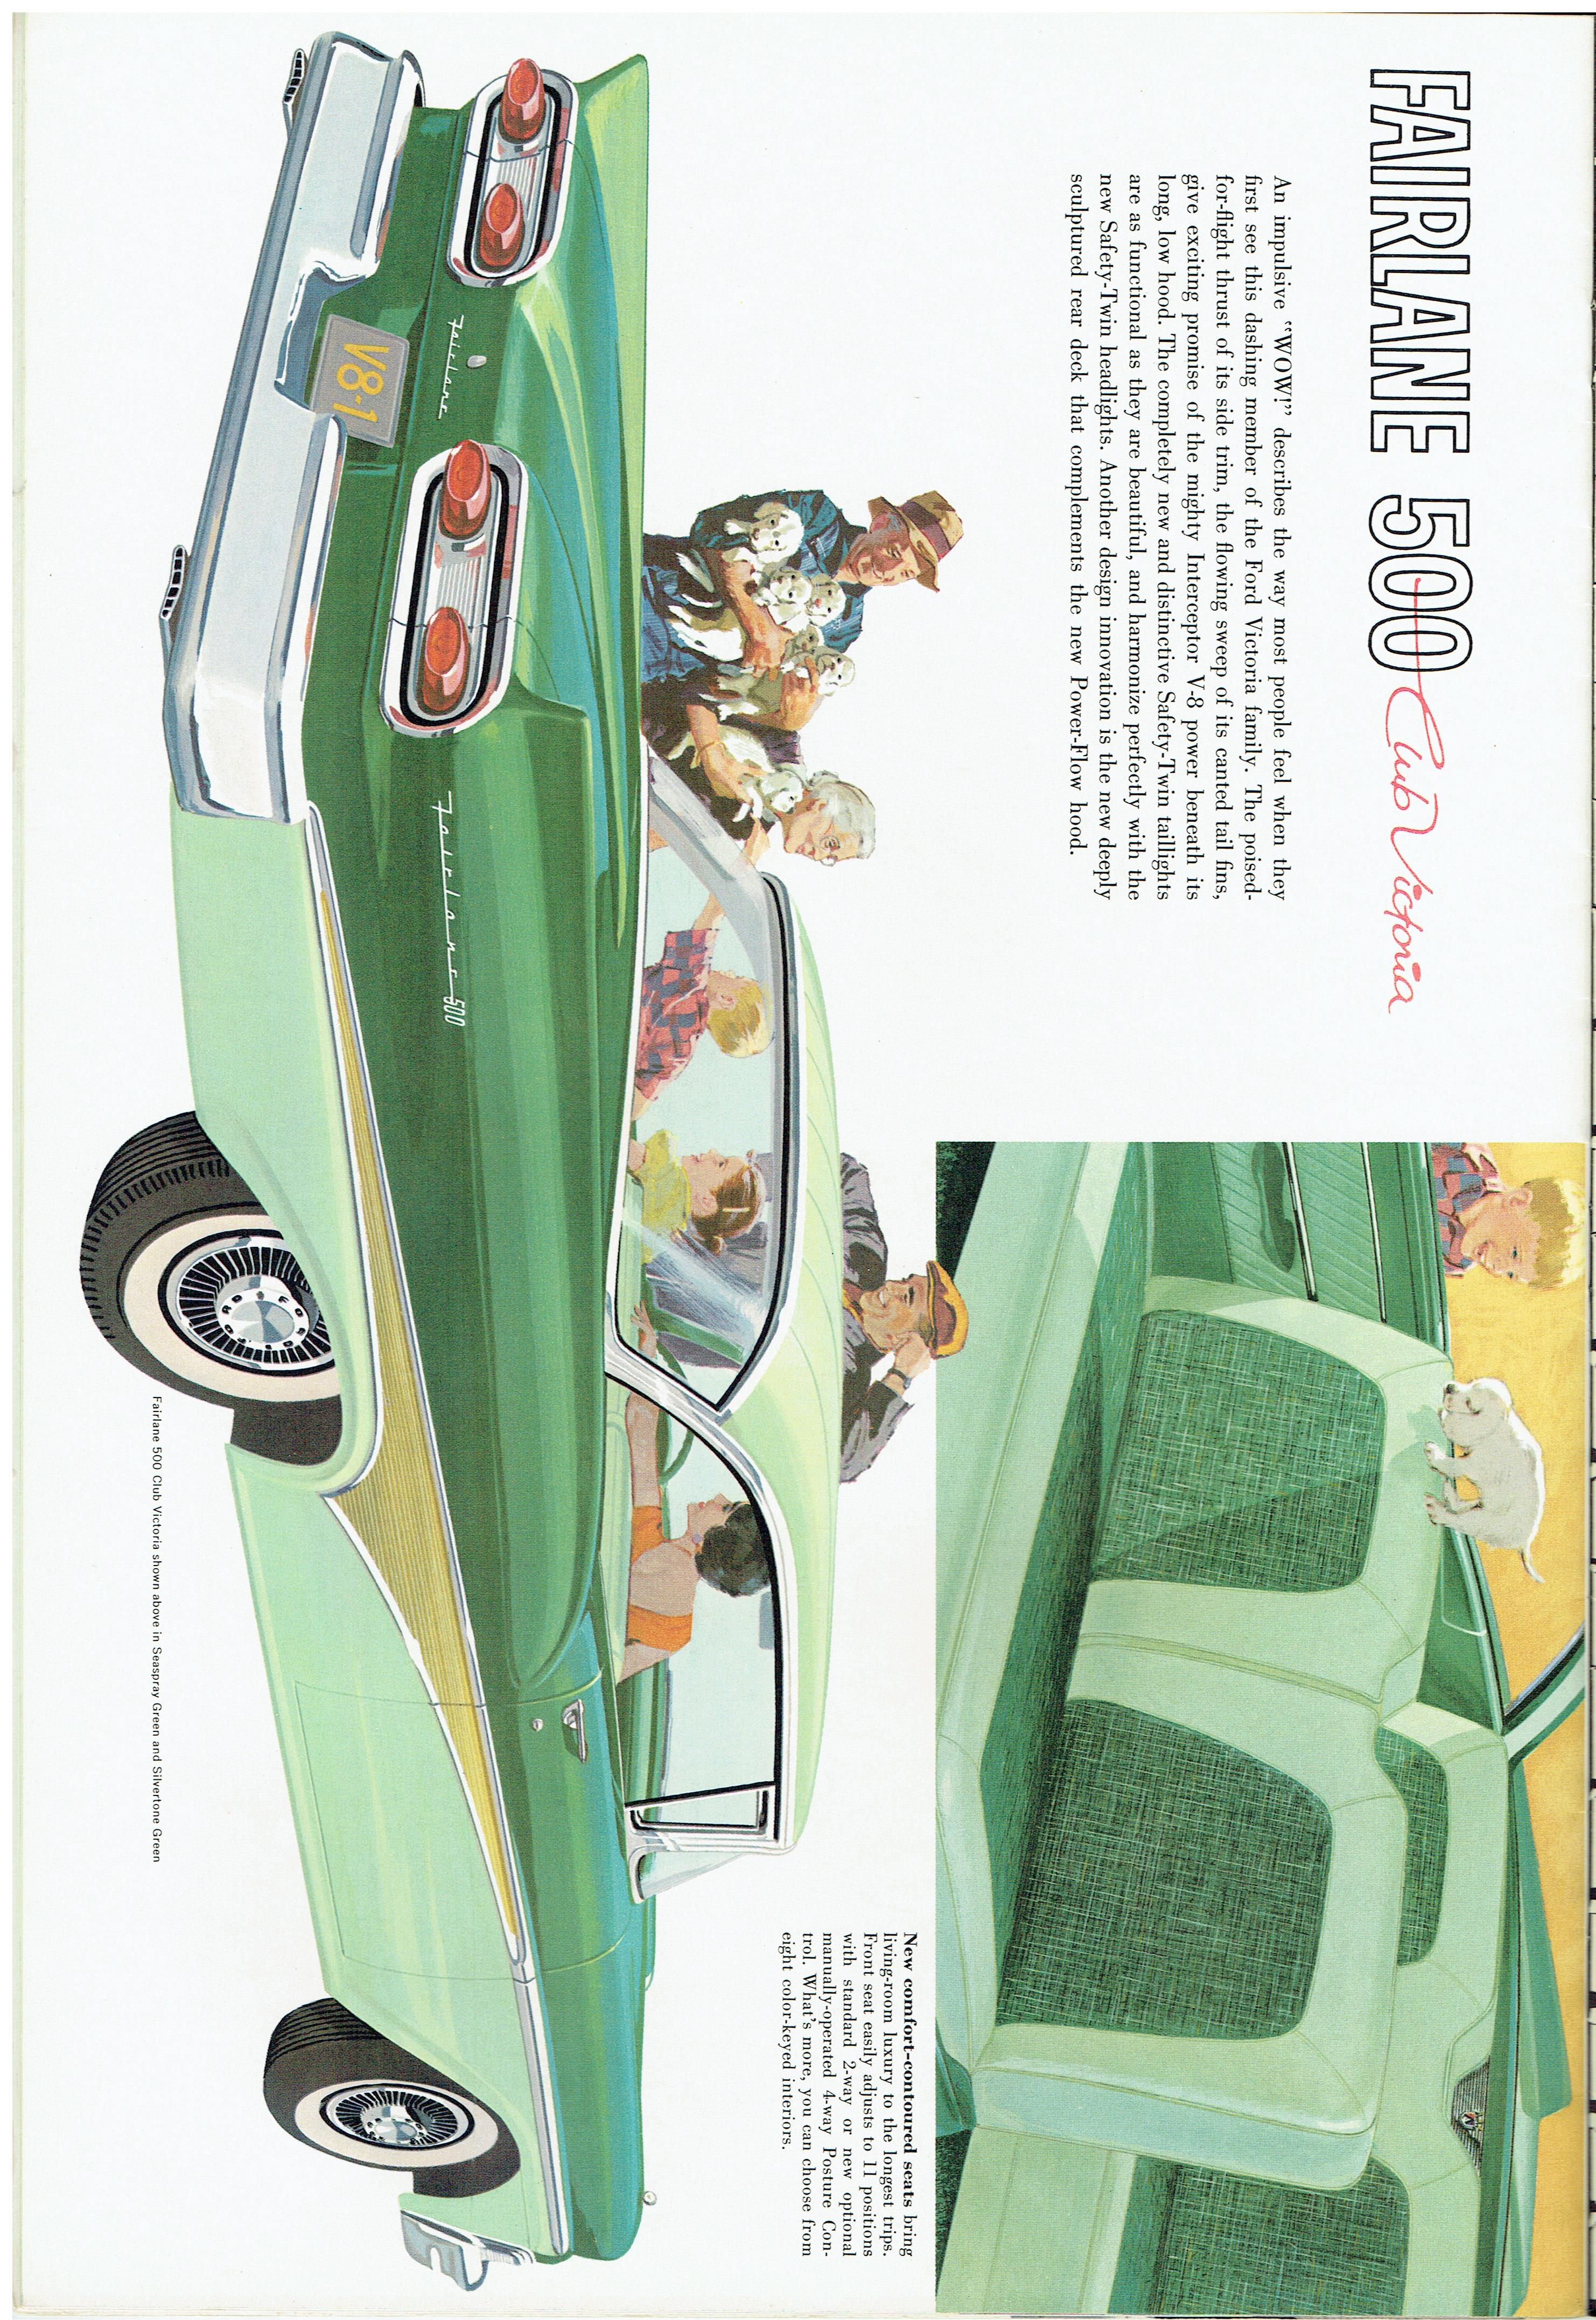 1958 Ford Fairlane 9-57 (9).jpg-2023-6-19 16.55.33